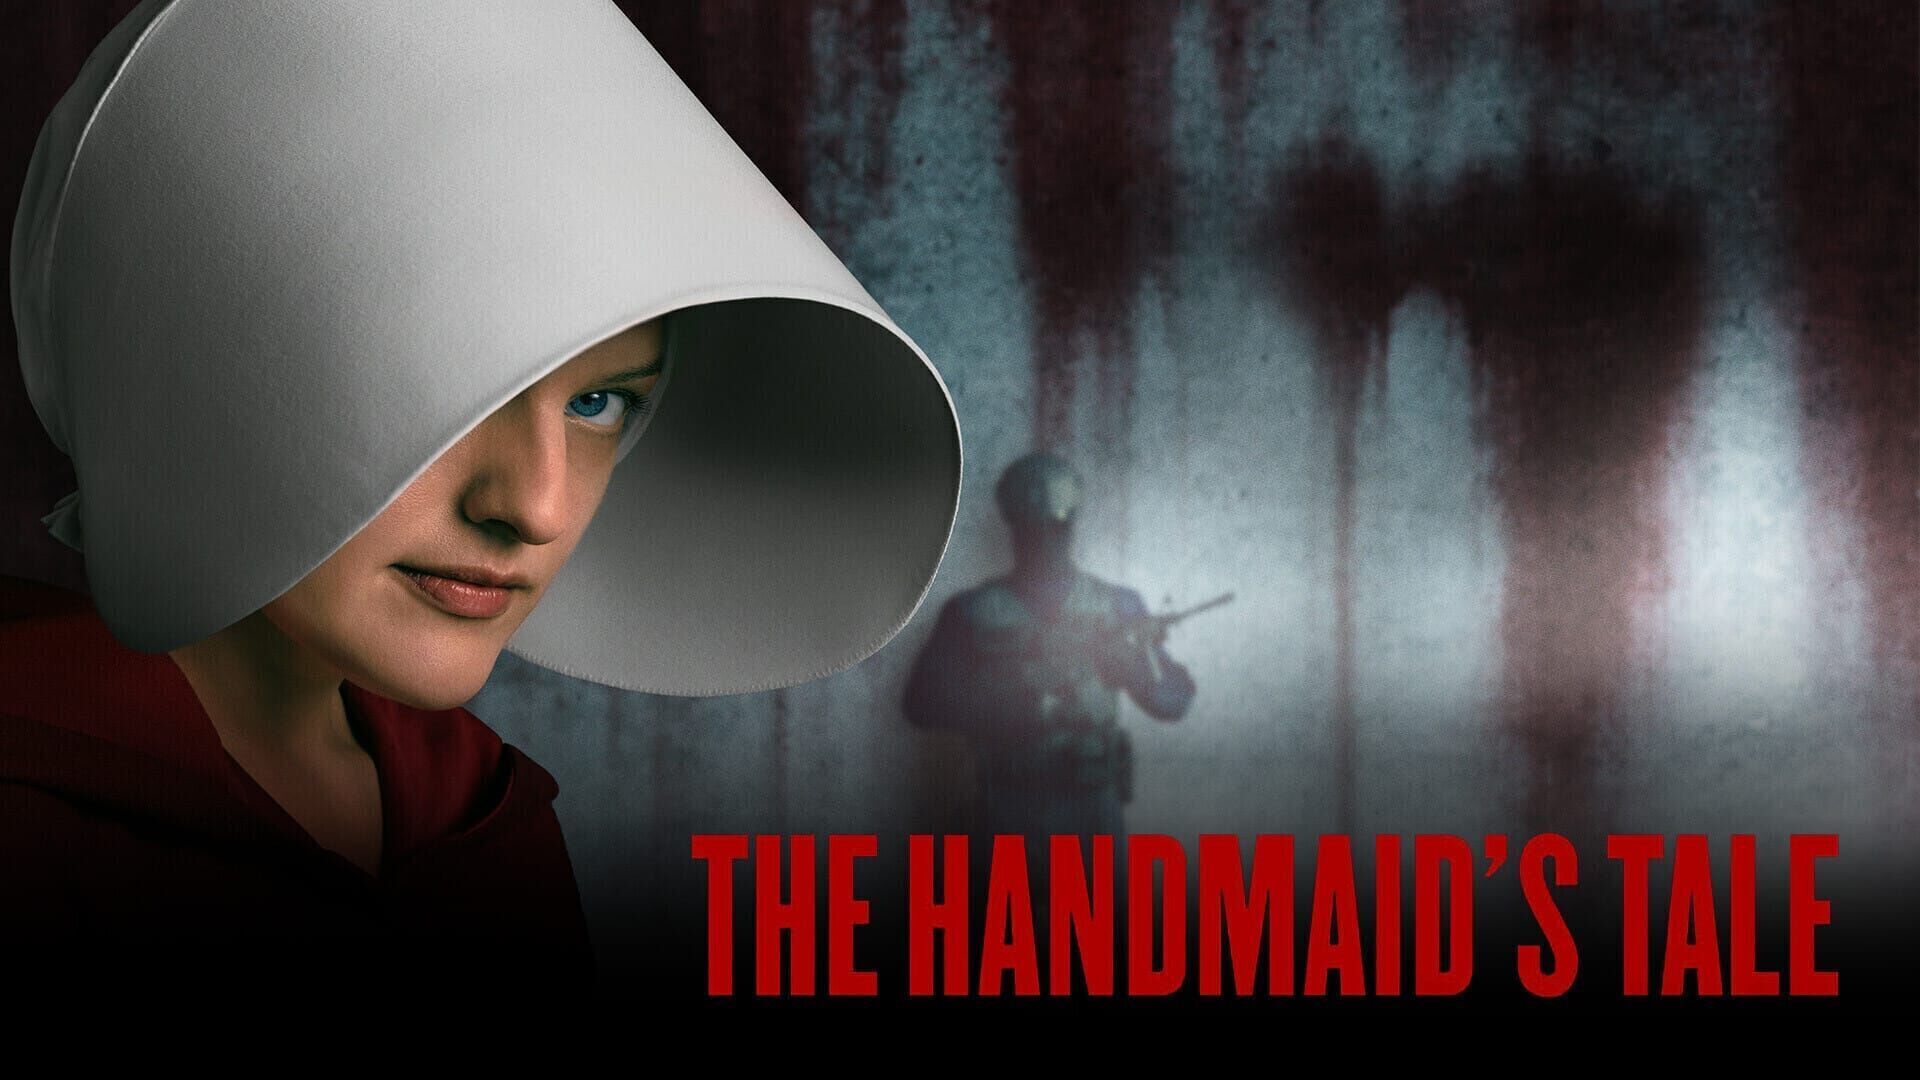 The Handmaid's Tale : La servante écarlate - Alerte